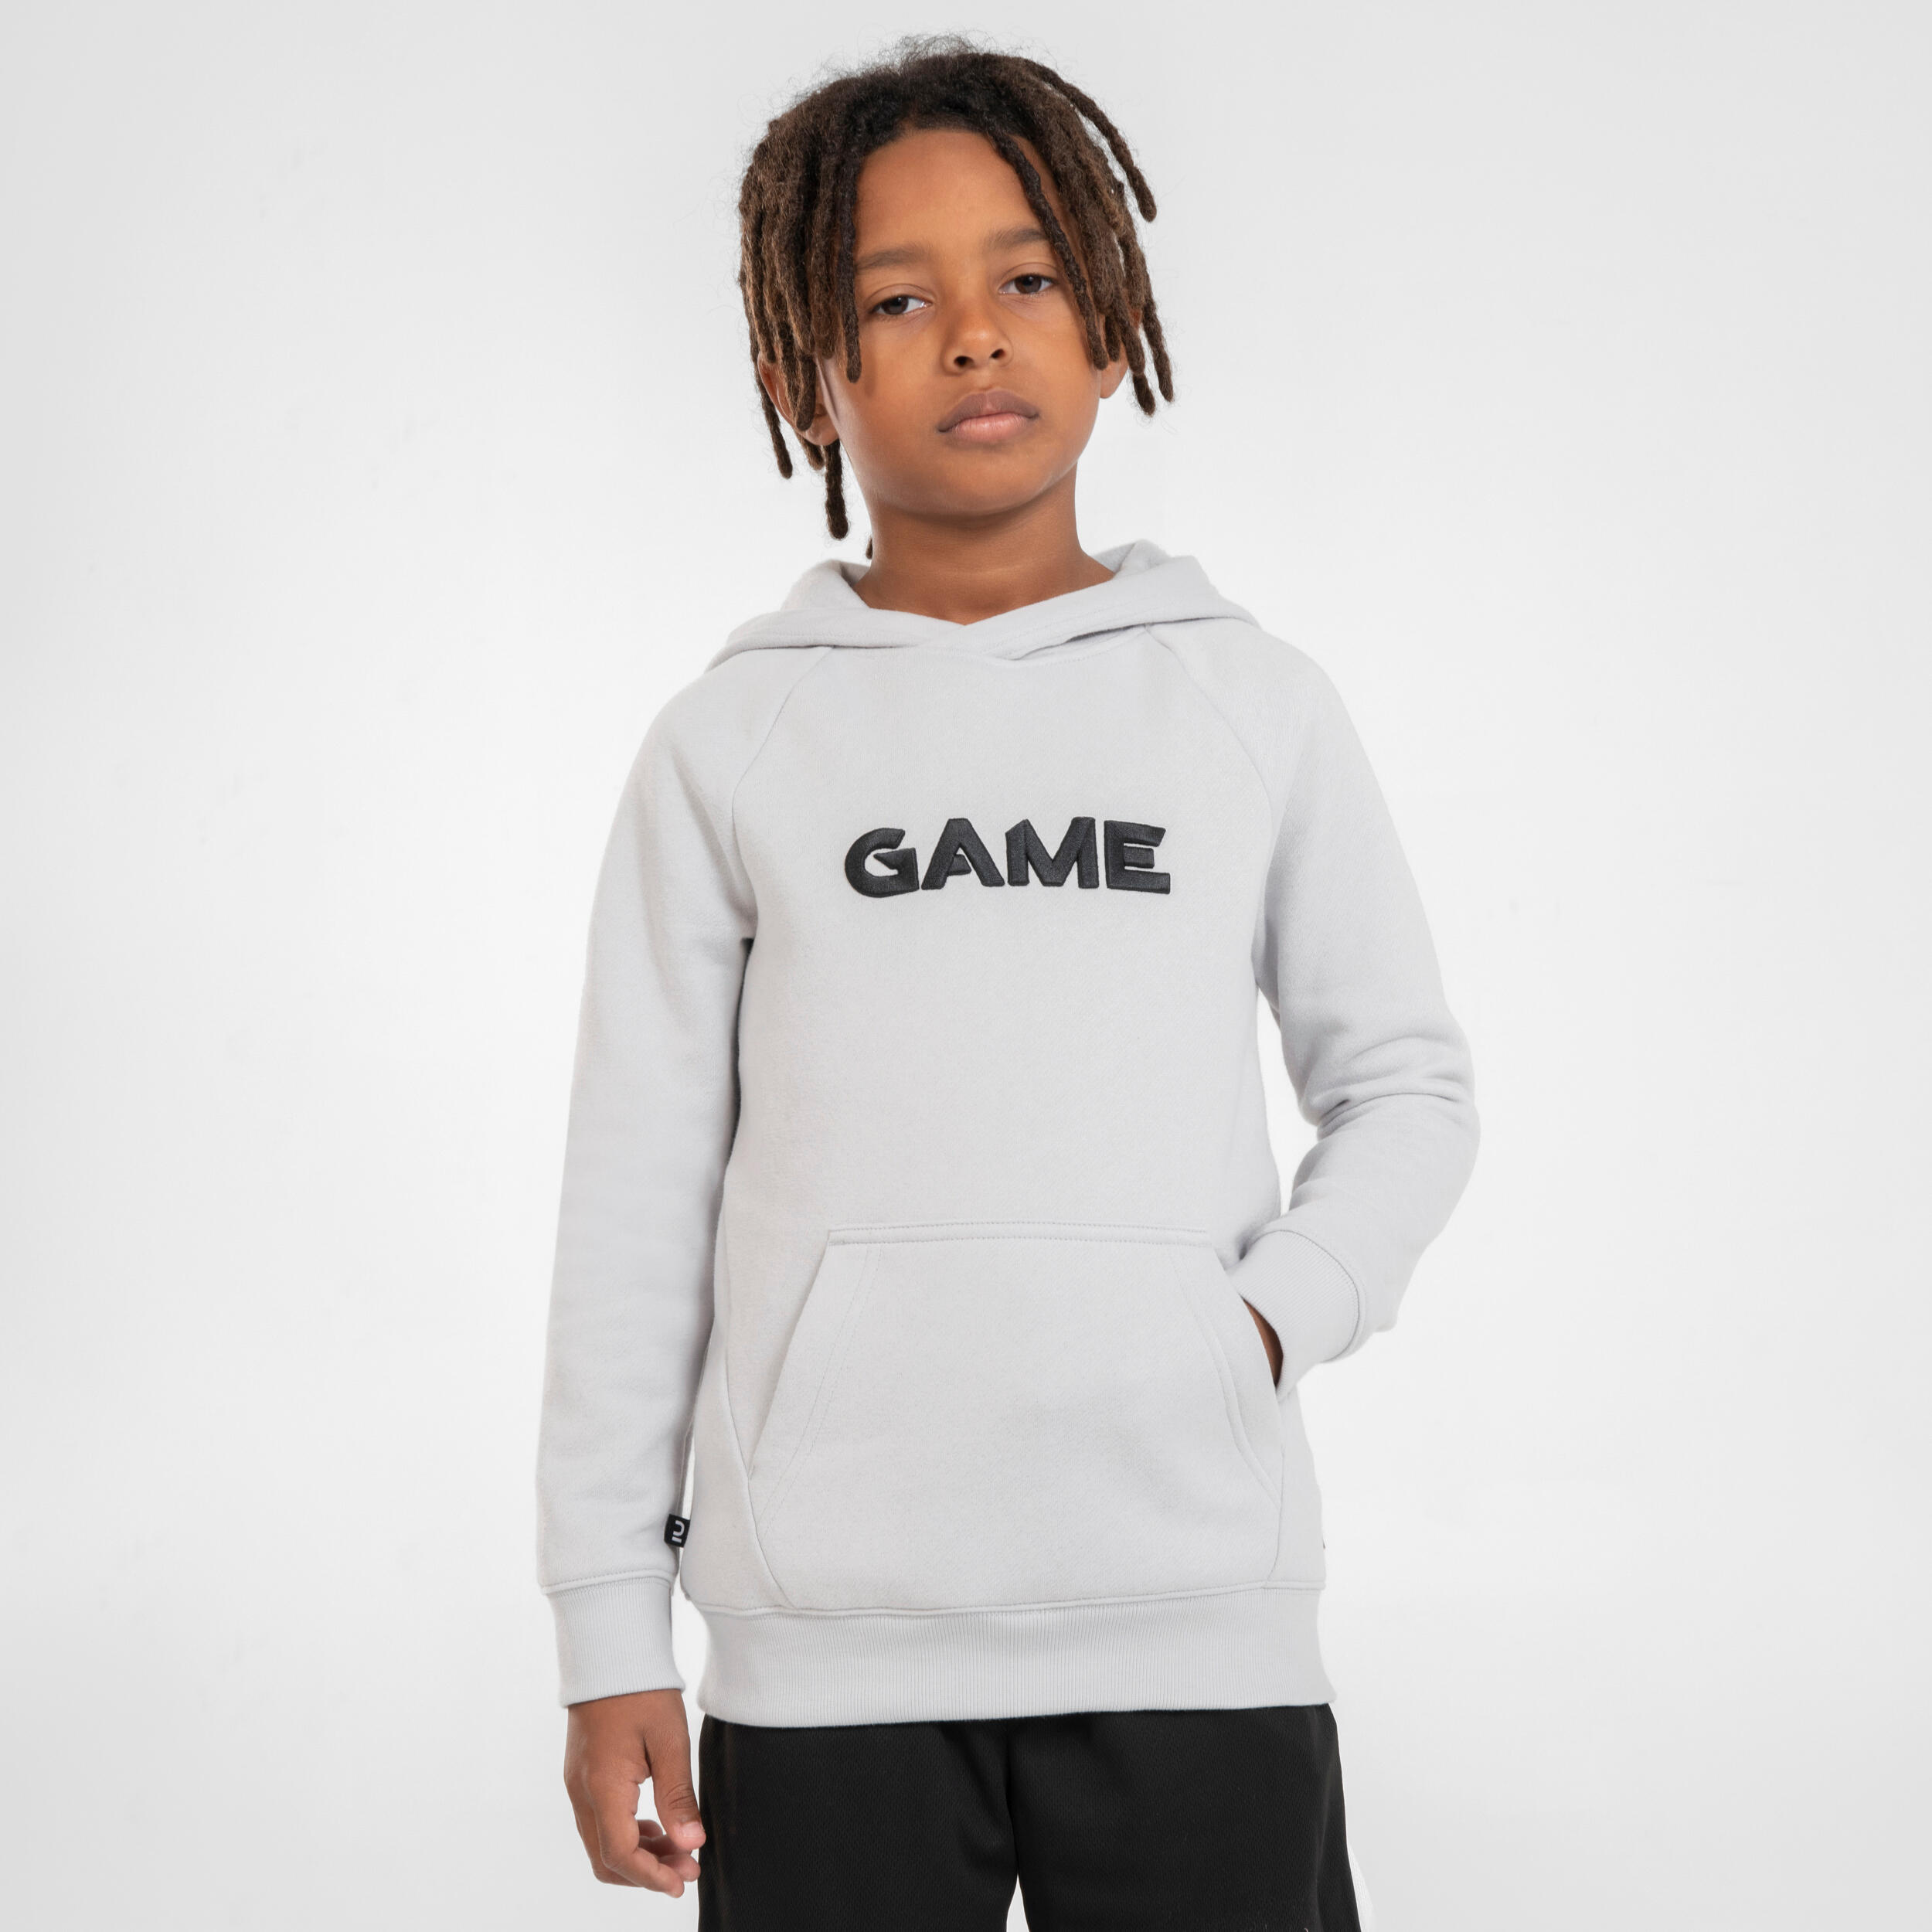 TARMAK Boys'/Girls' Basketball Sweatshirt H100 - Light Grey/Game